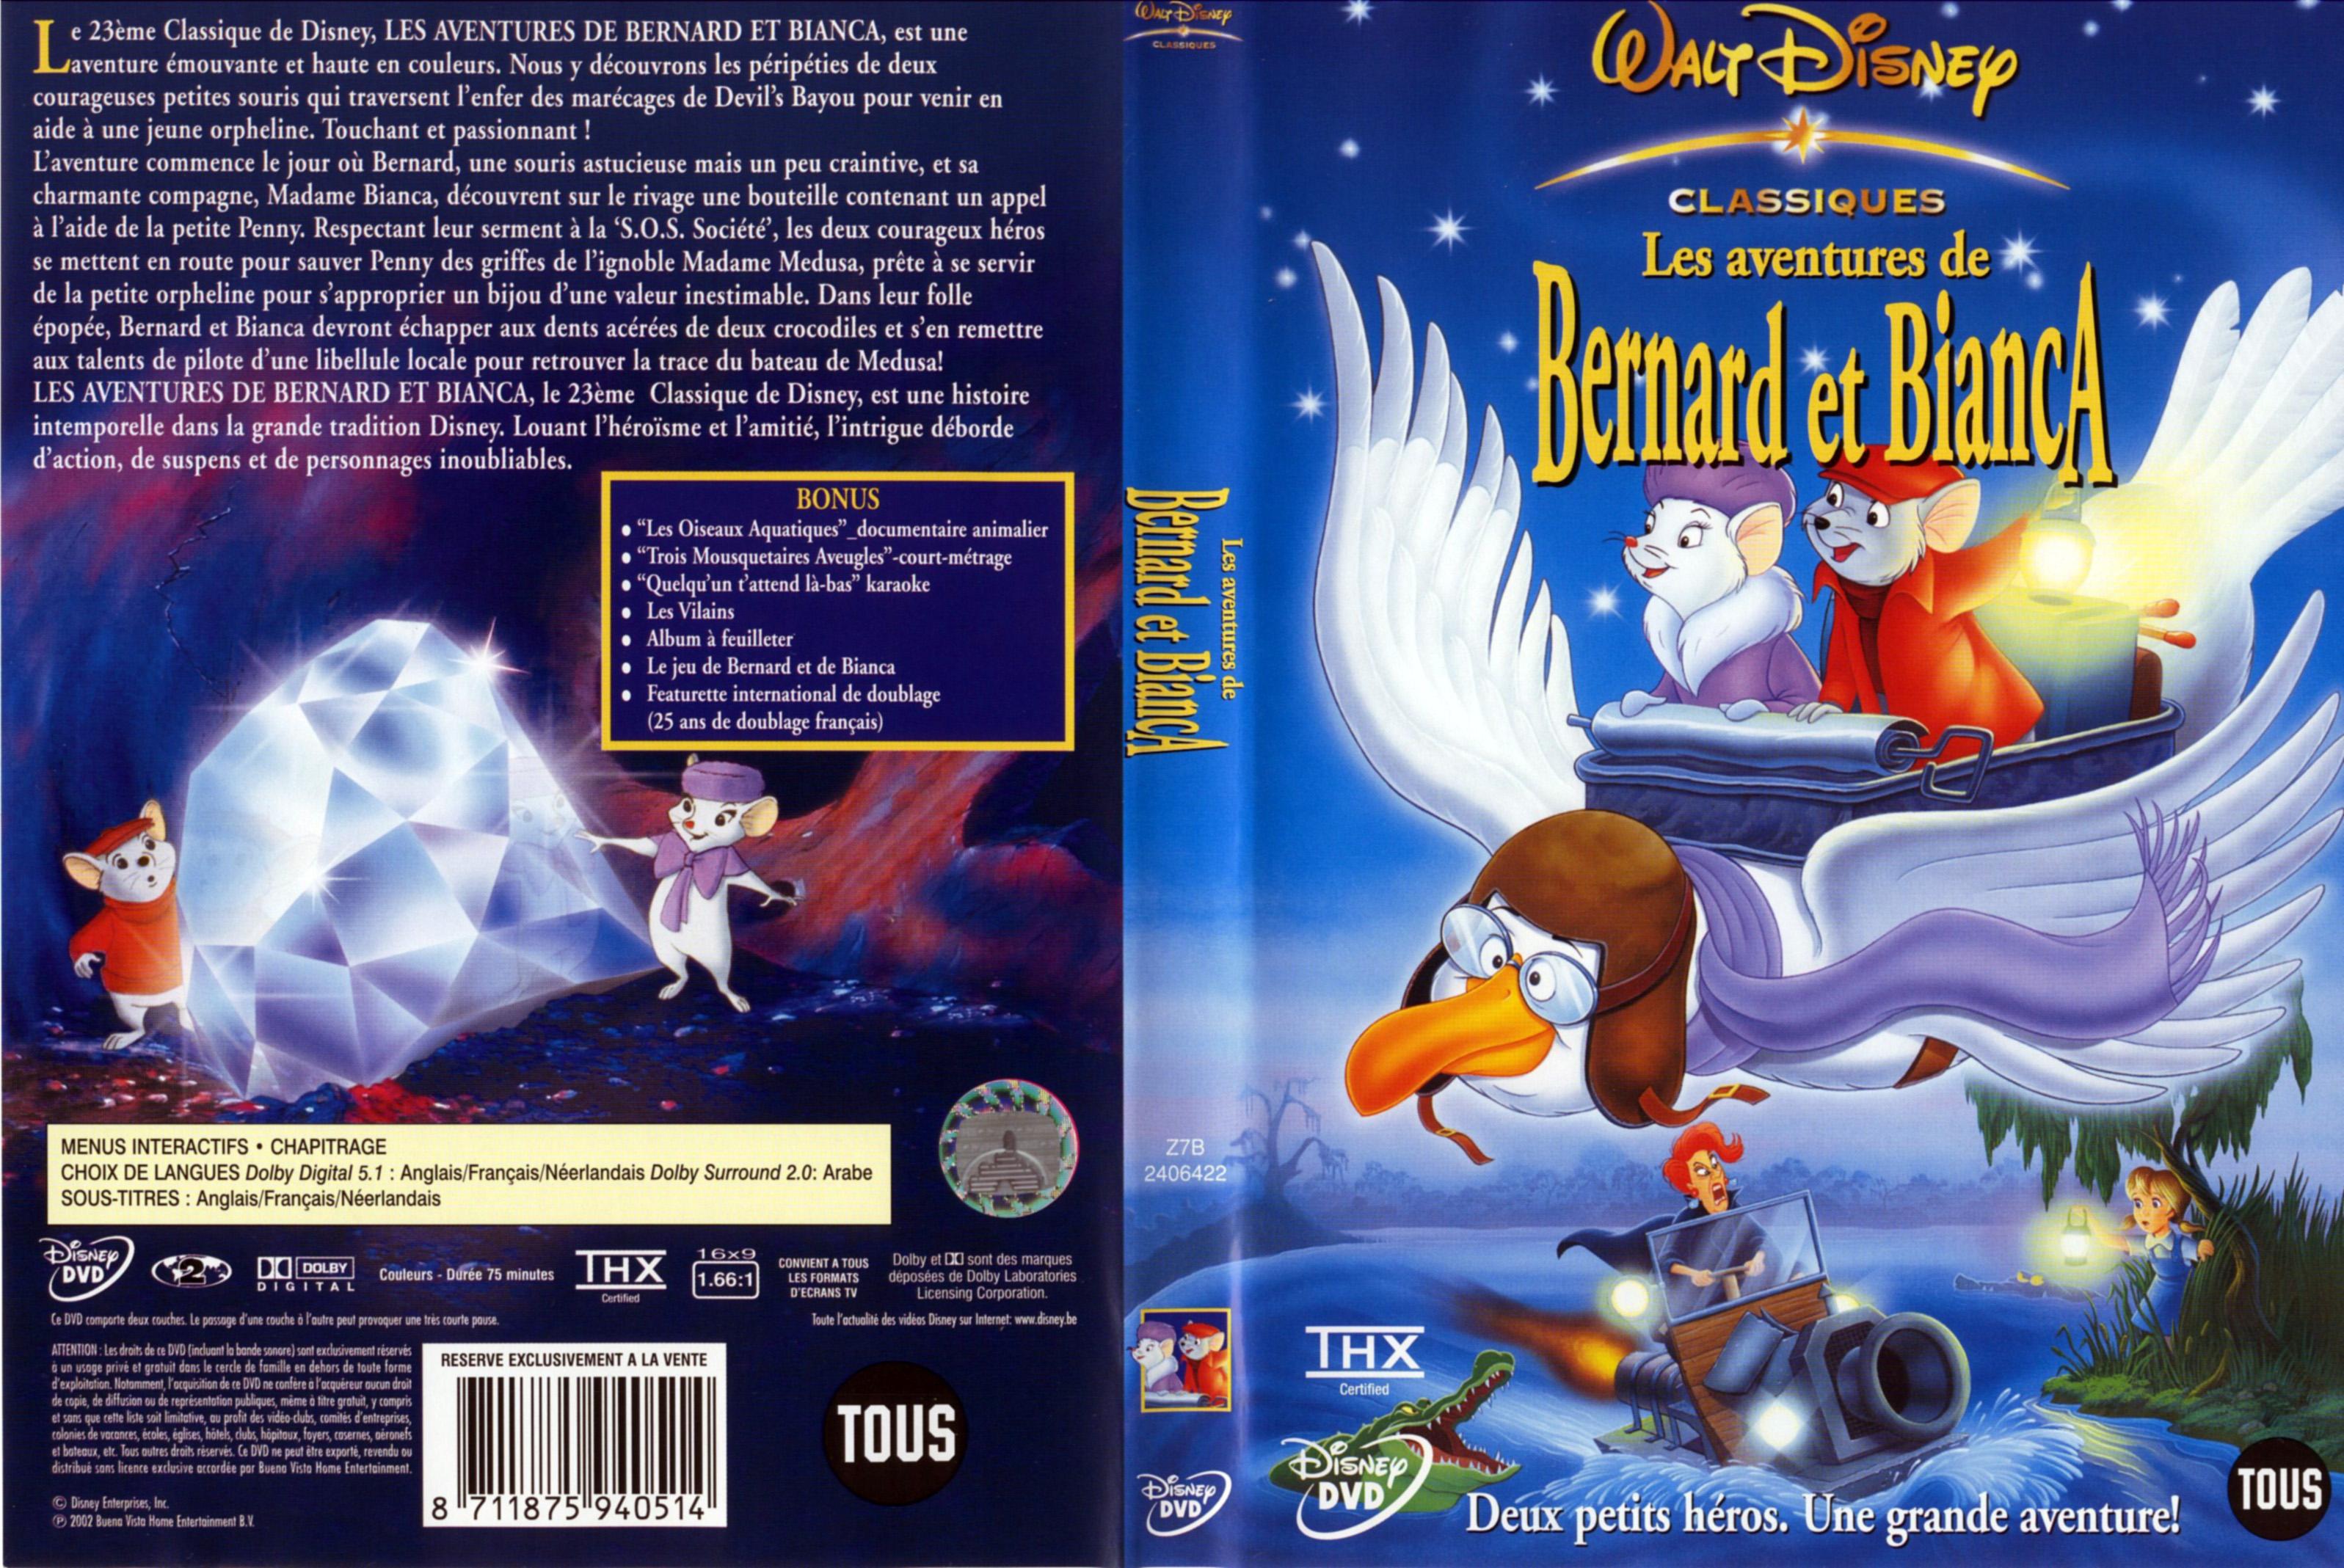 Jaquette DVD Les aventures de Bernard et Bianca v2